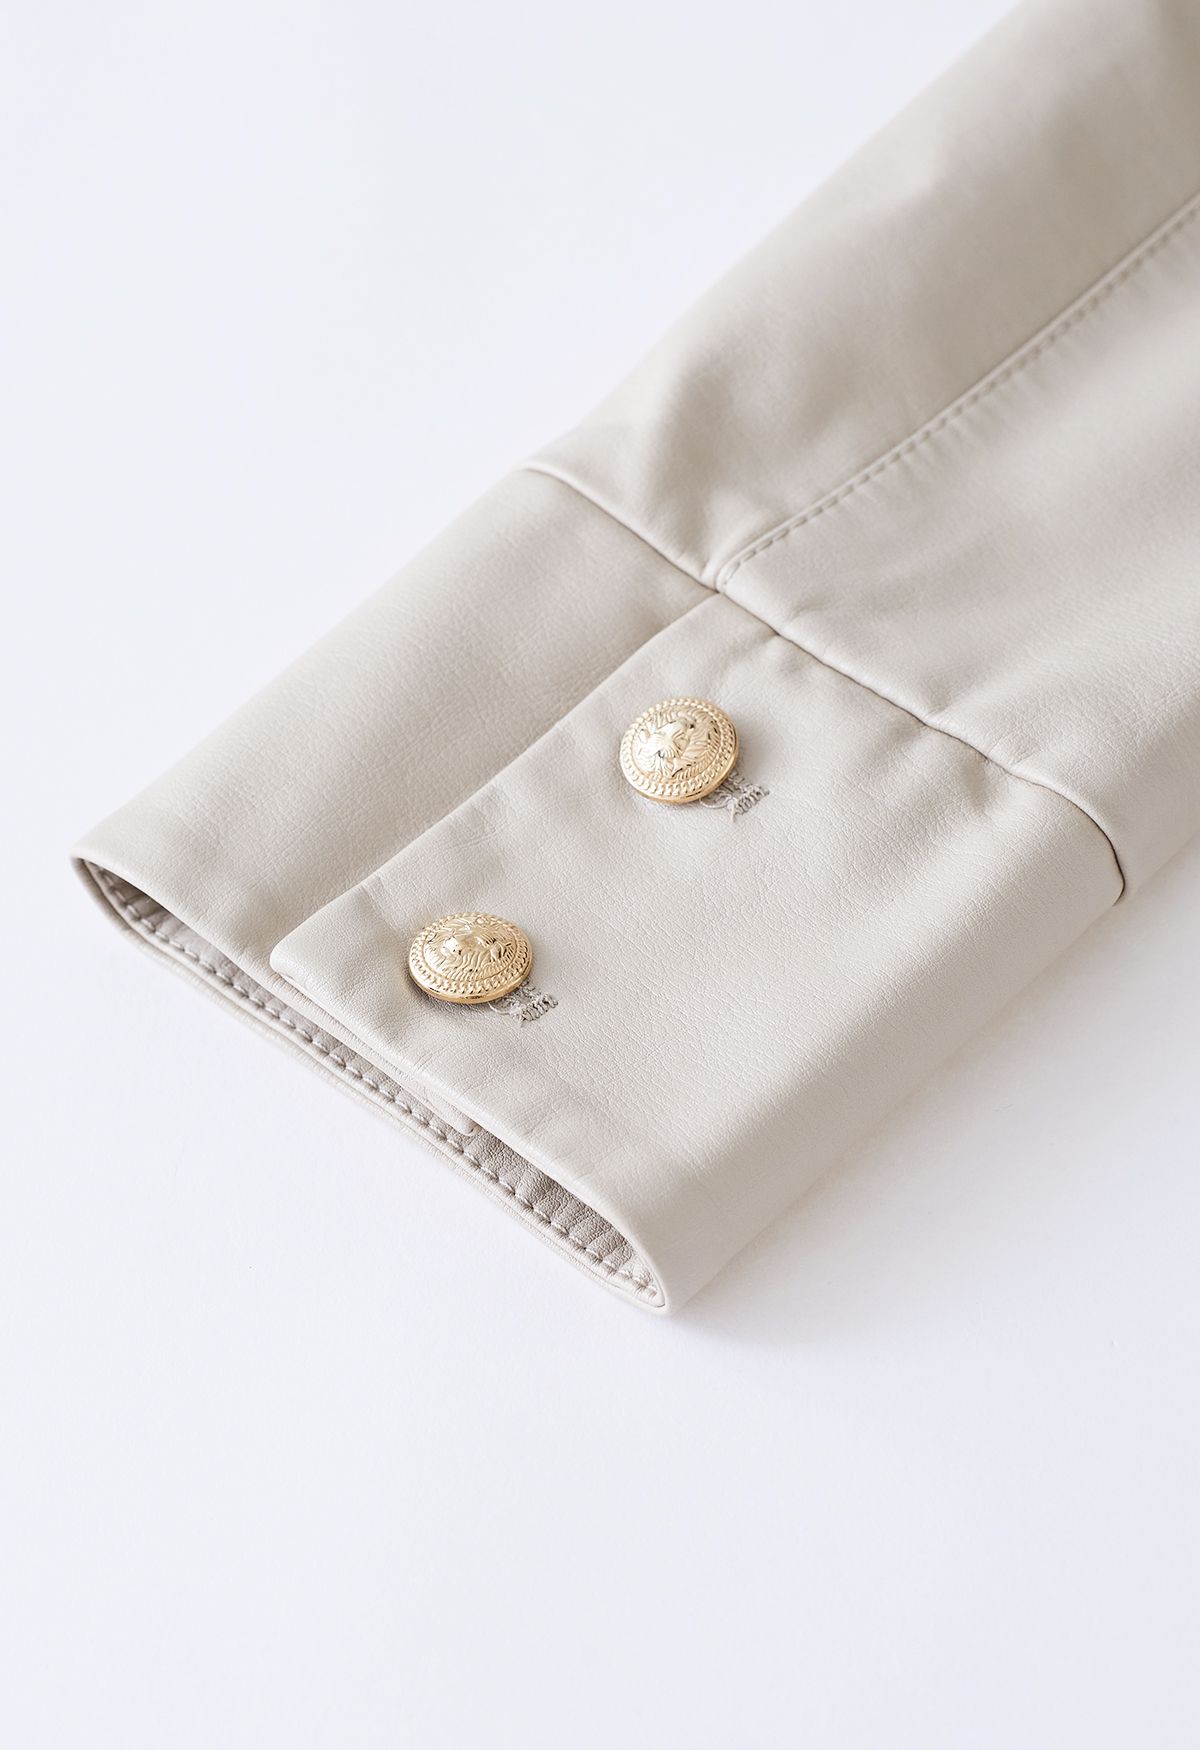 Welt Pocket Trim Faux Leather Jacket in Ivory